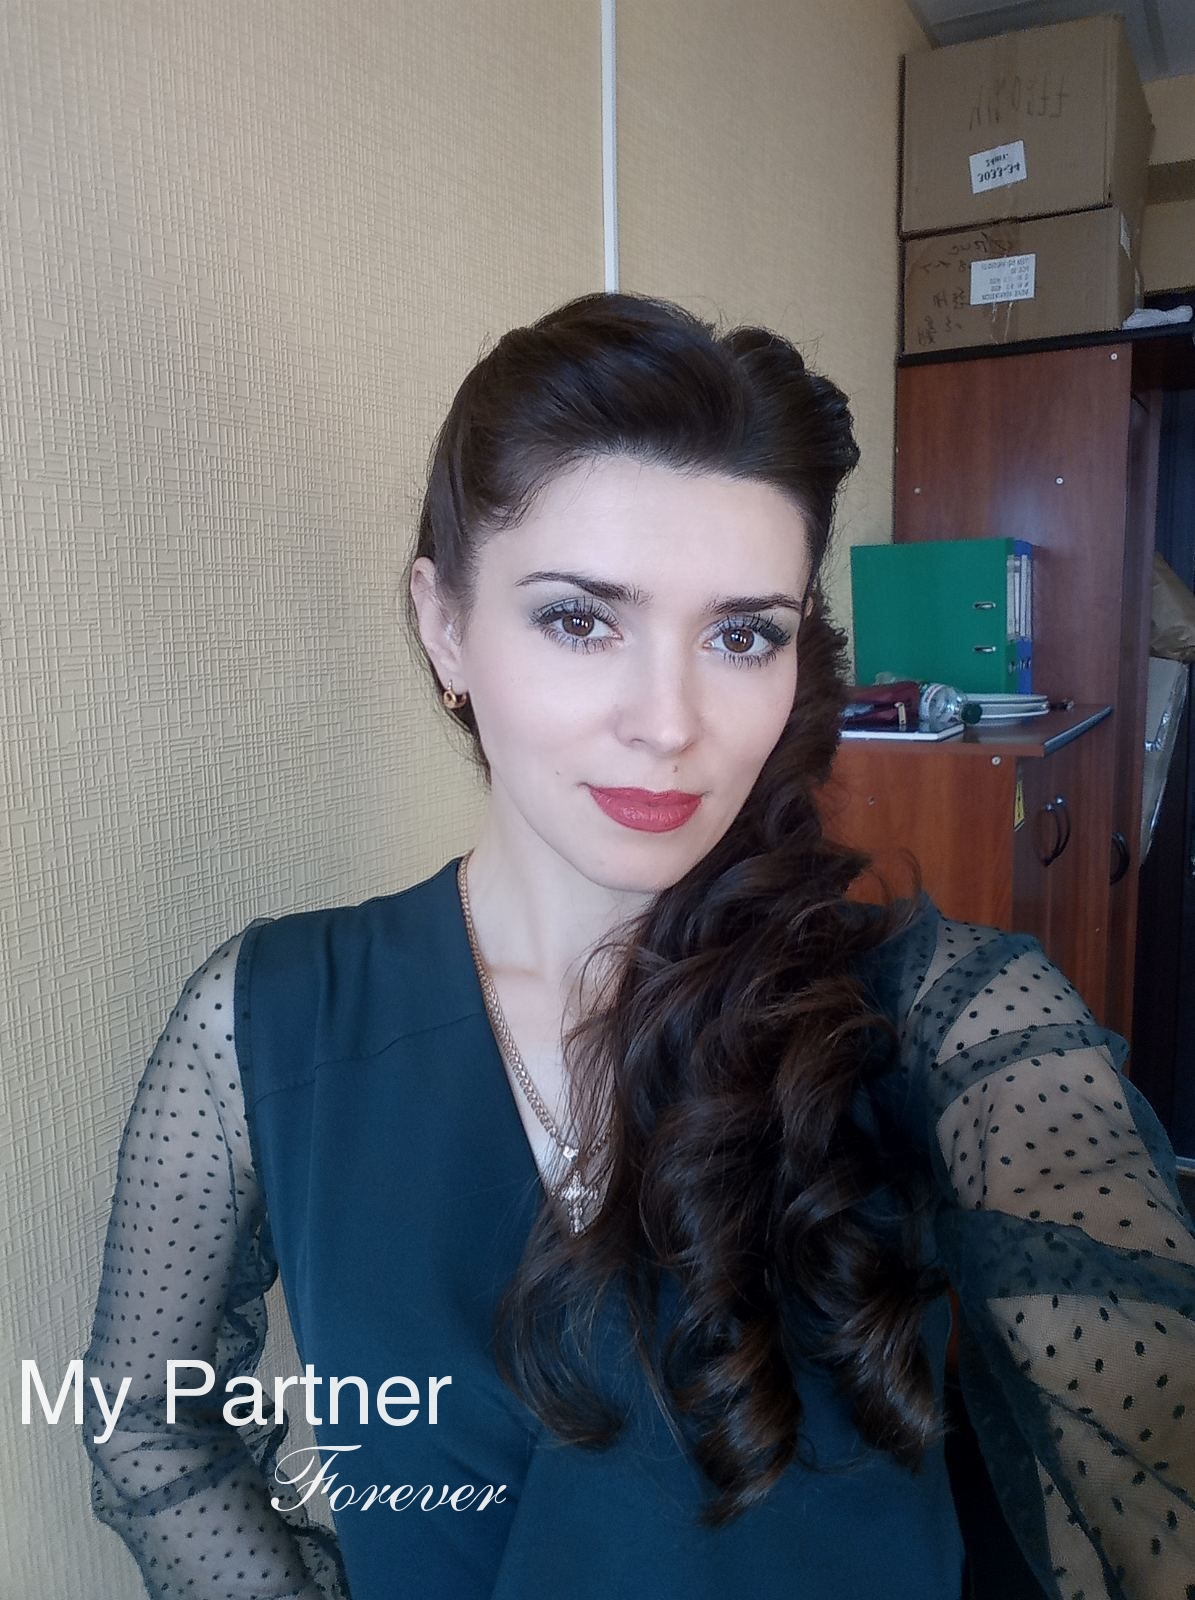 Dating Service to Meet Beautiful Ukrainian Lady Viktoriya from Kirovograd, Ukraine